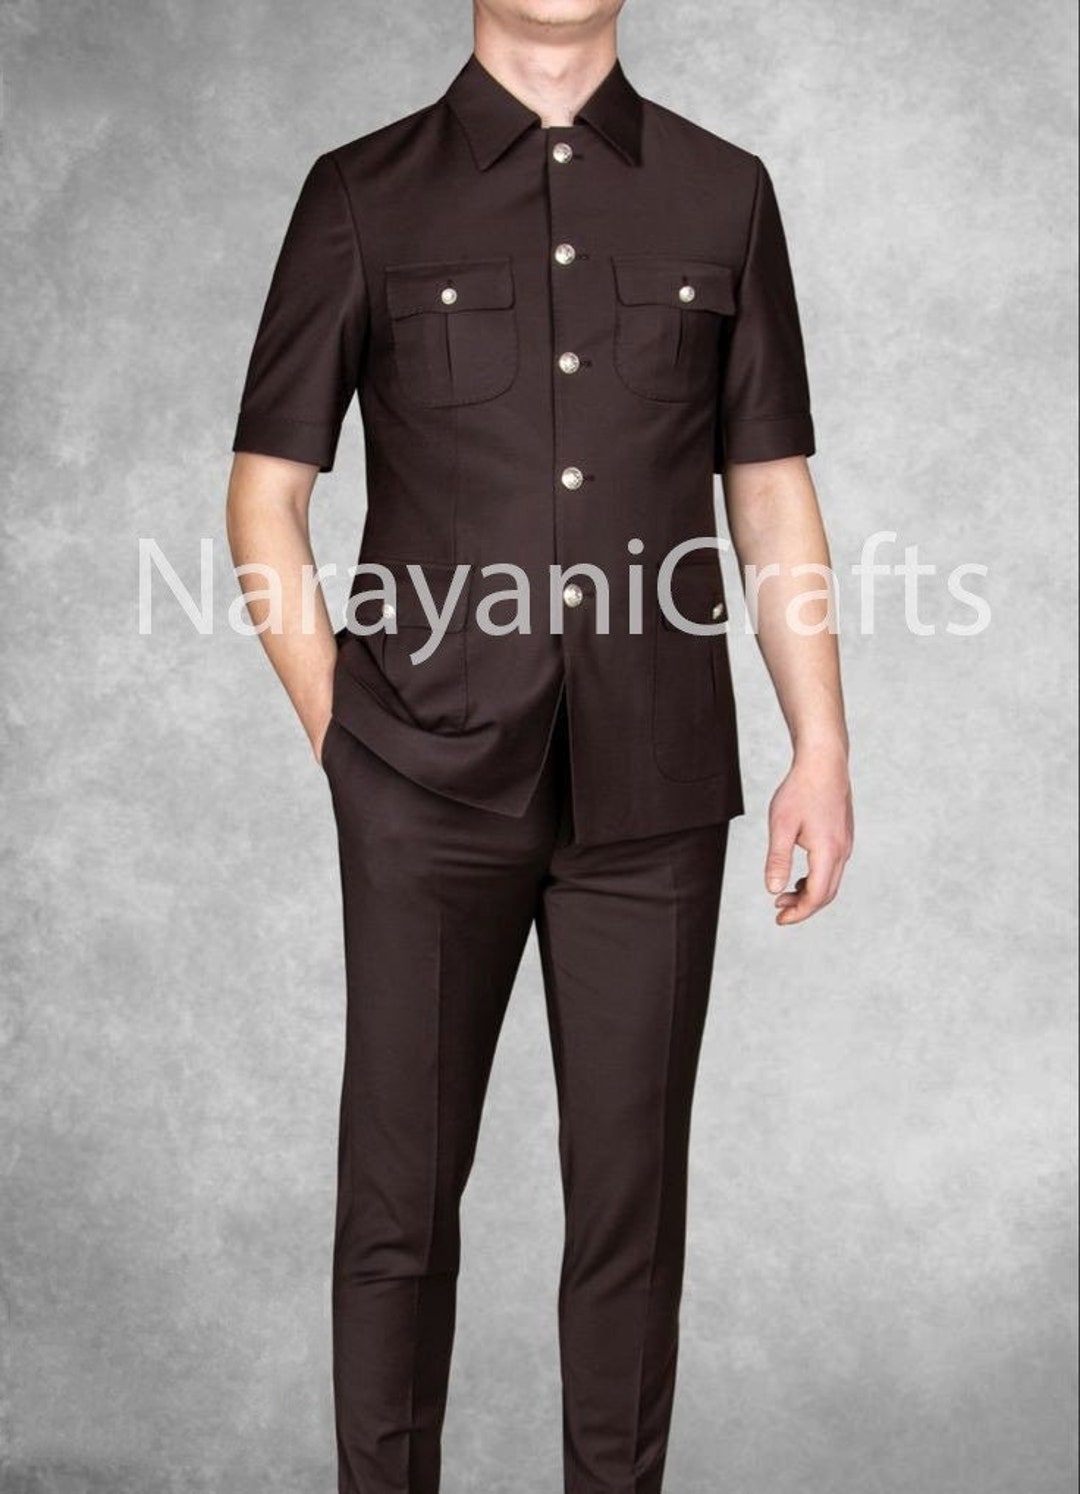 Ivory Cream Plain-Solid Premium Wool Blend Bandhgala/Jodhpuri Suits for Men.